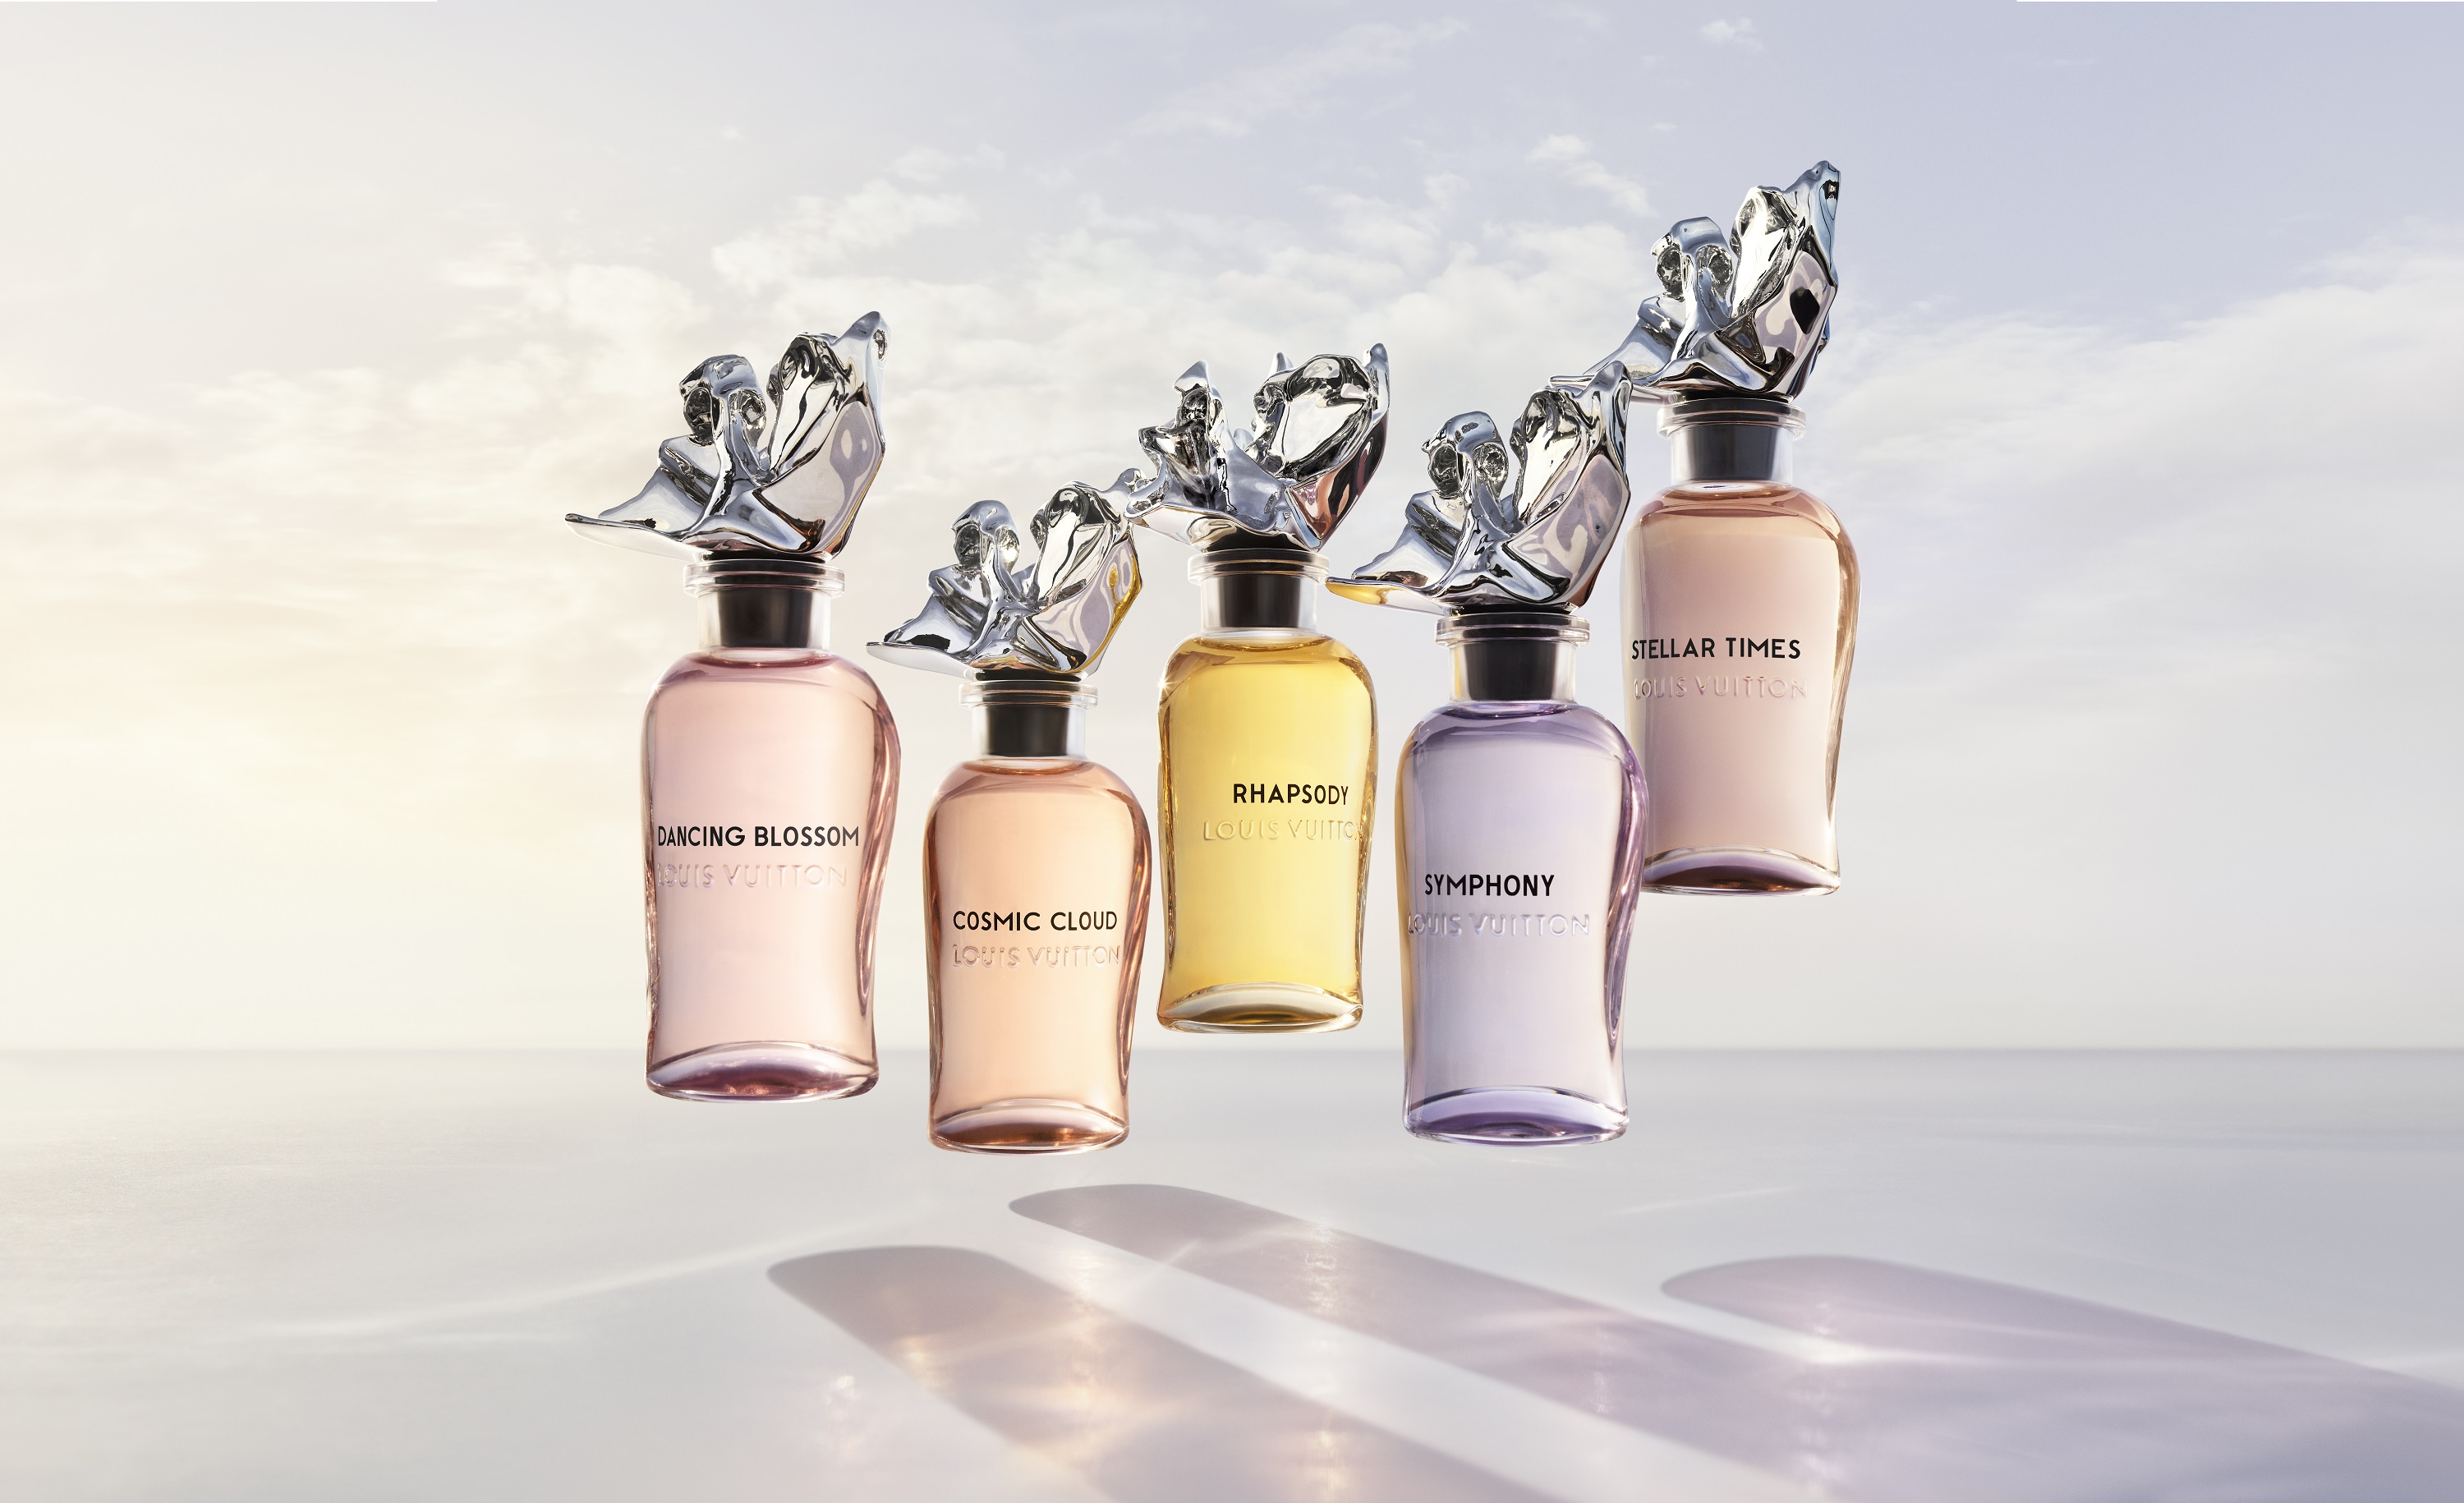 Louis Vuitton Perfume New Spain, SAVE 33% 